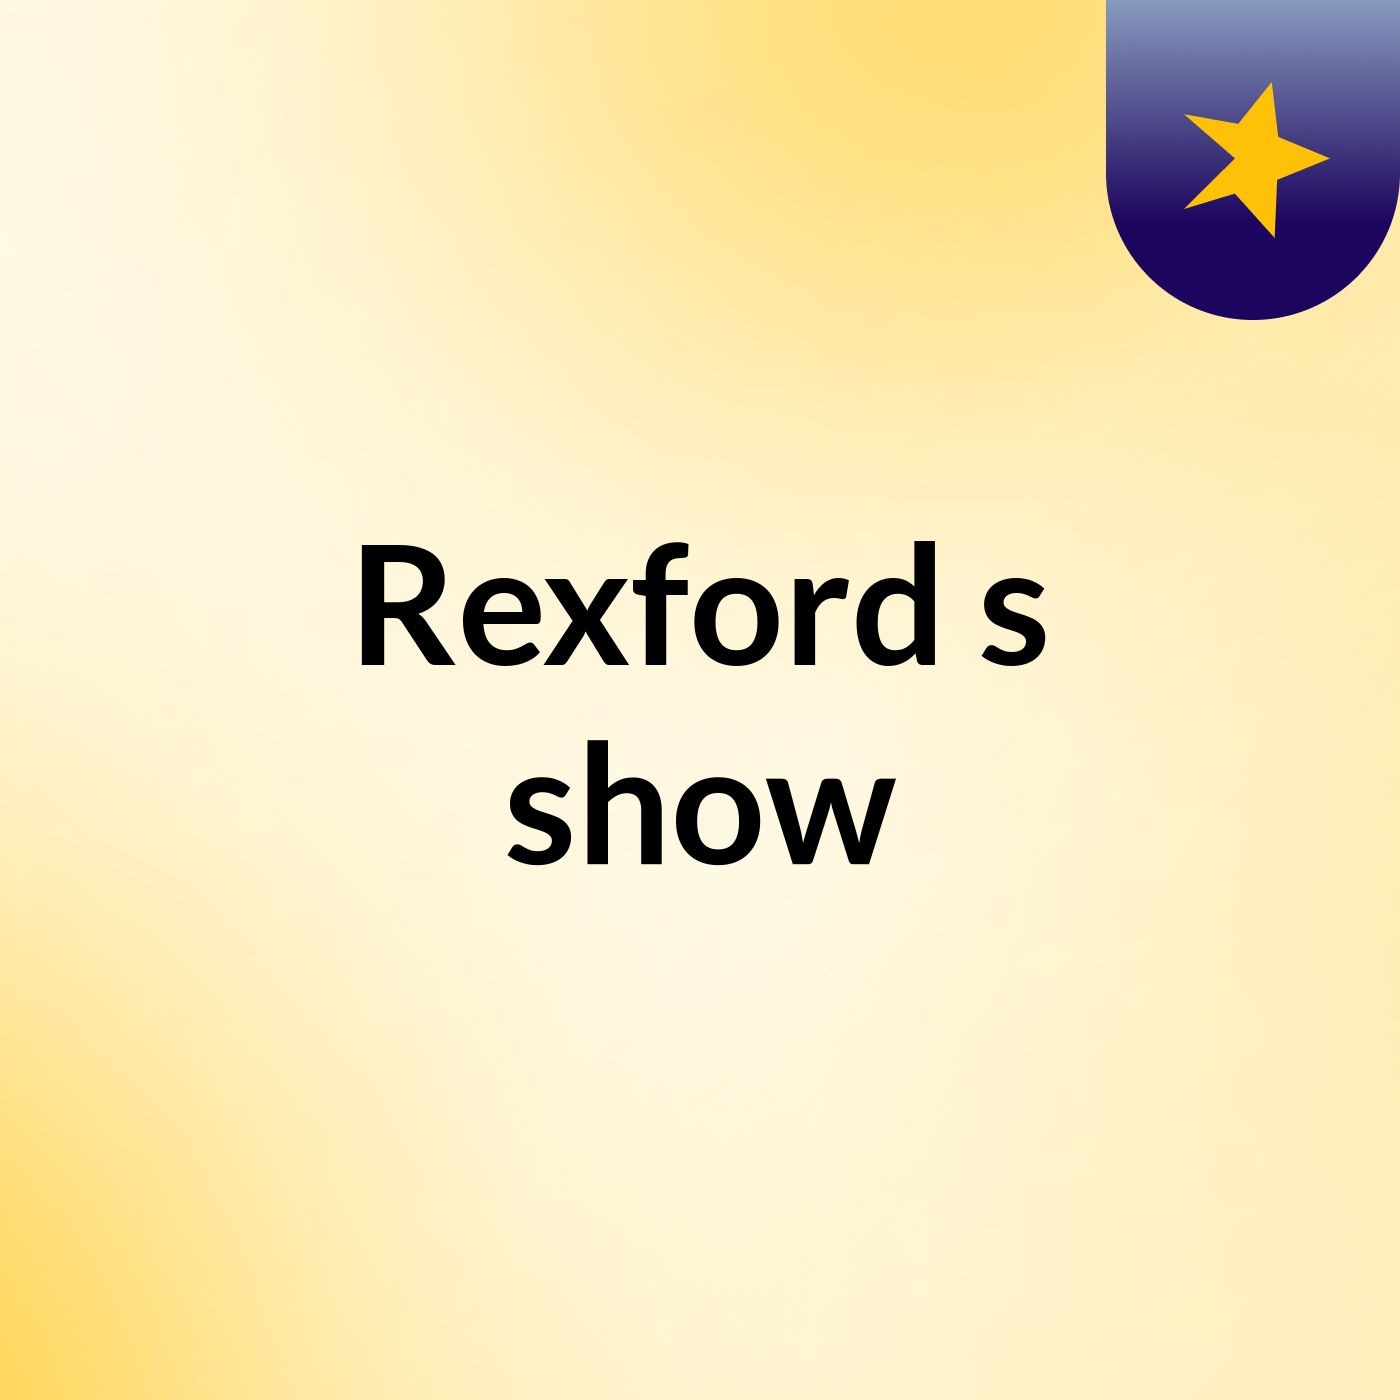 Rexford's show